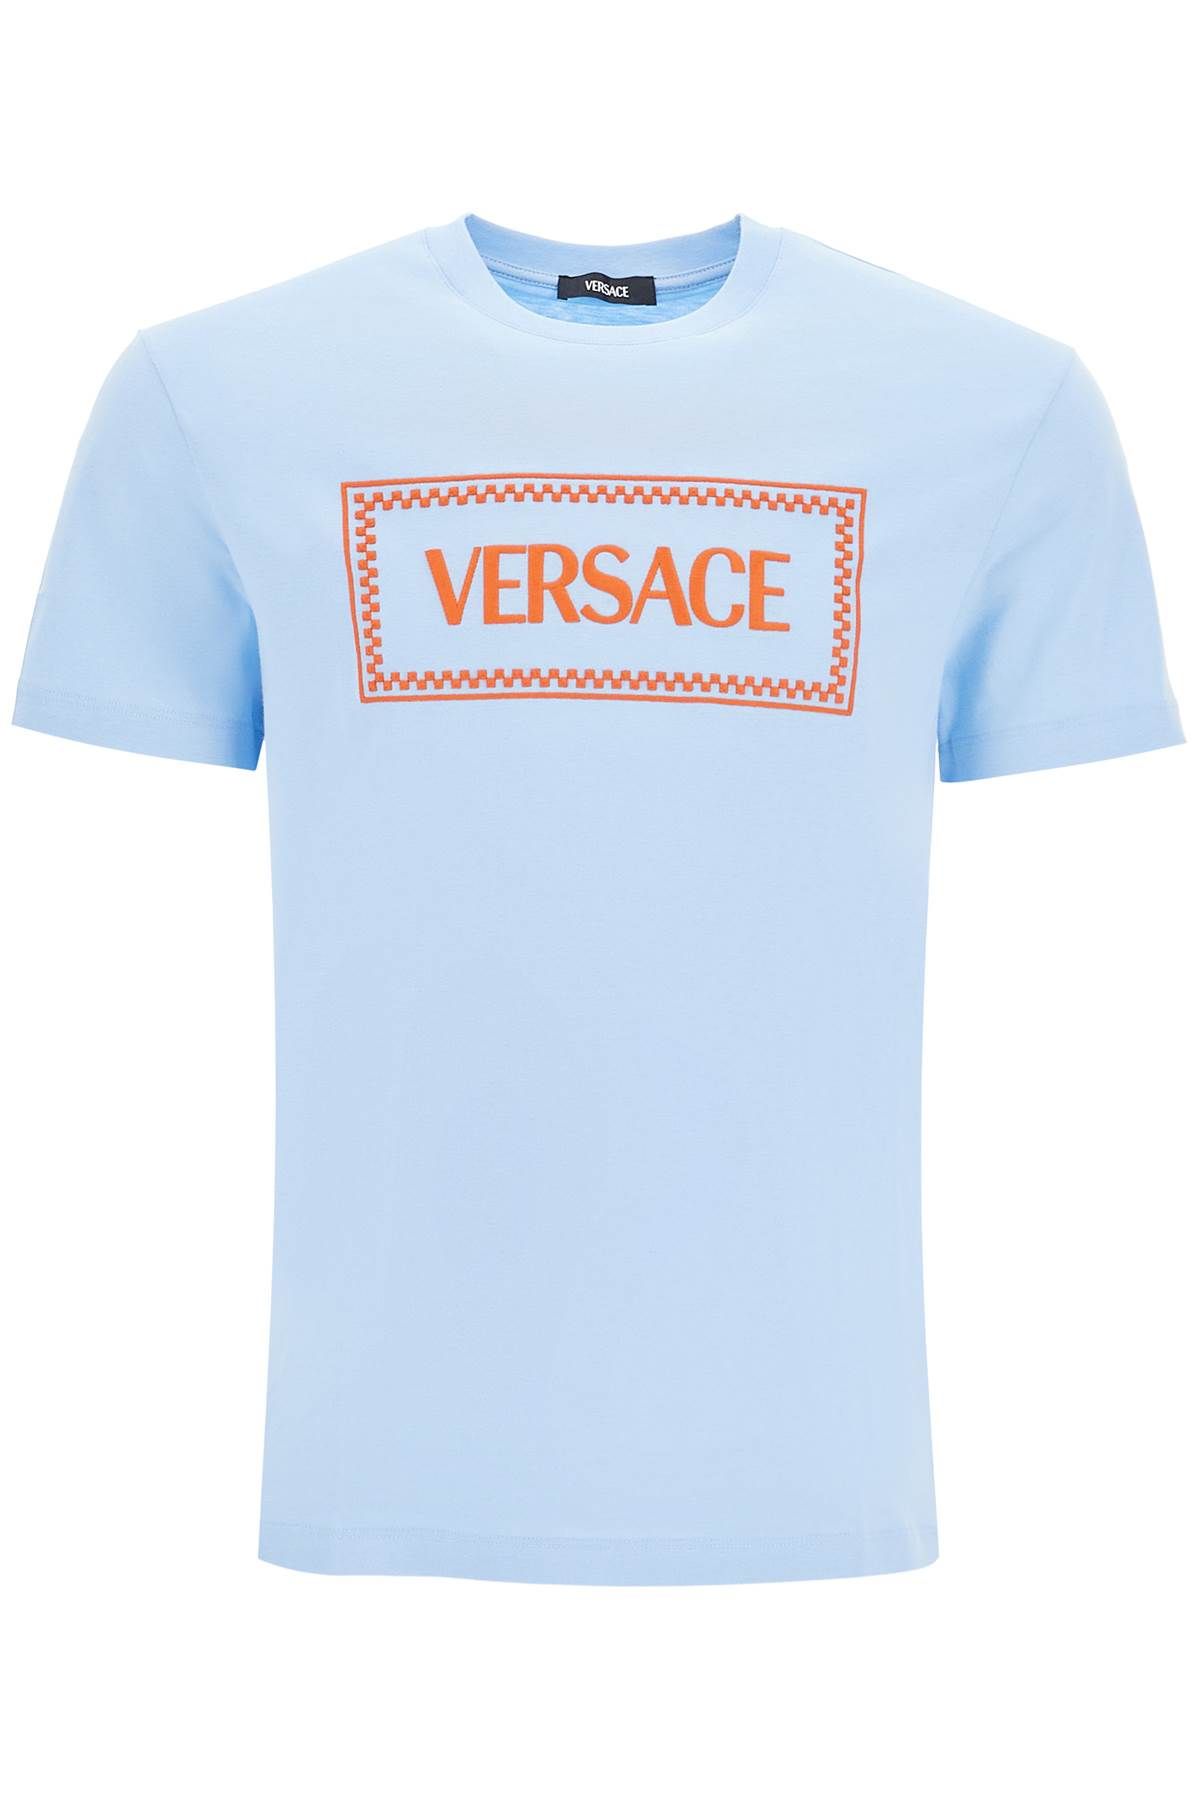 Versace VERSACE embroidered logo t-shirt